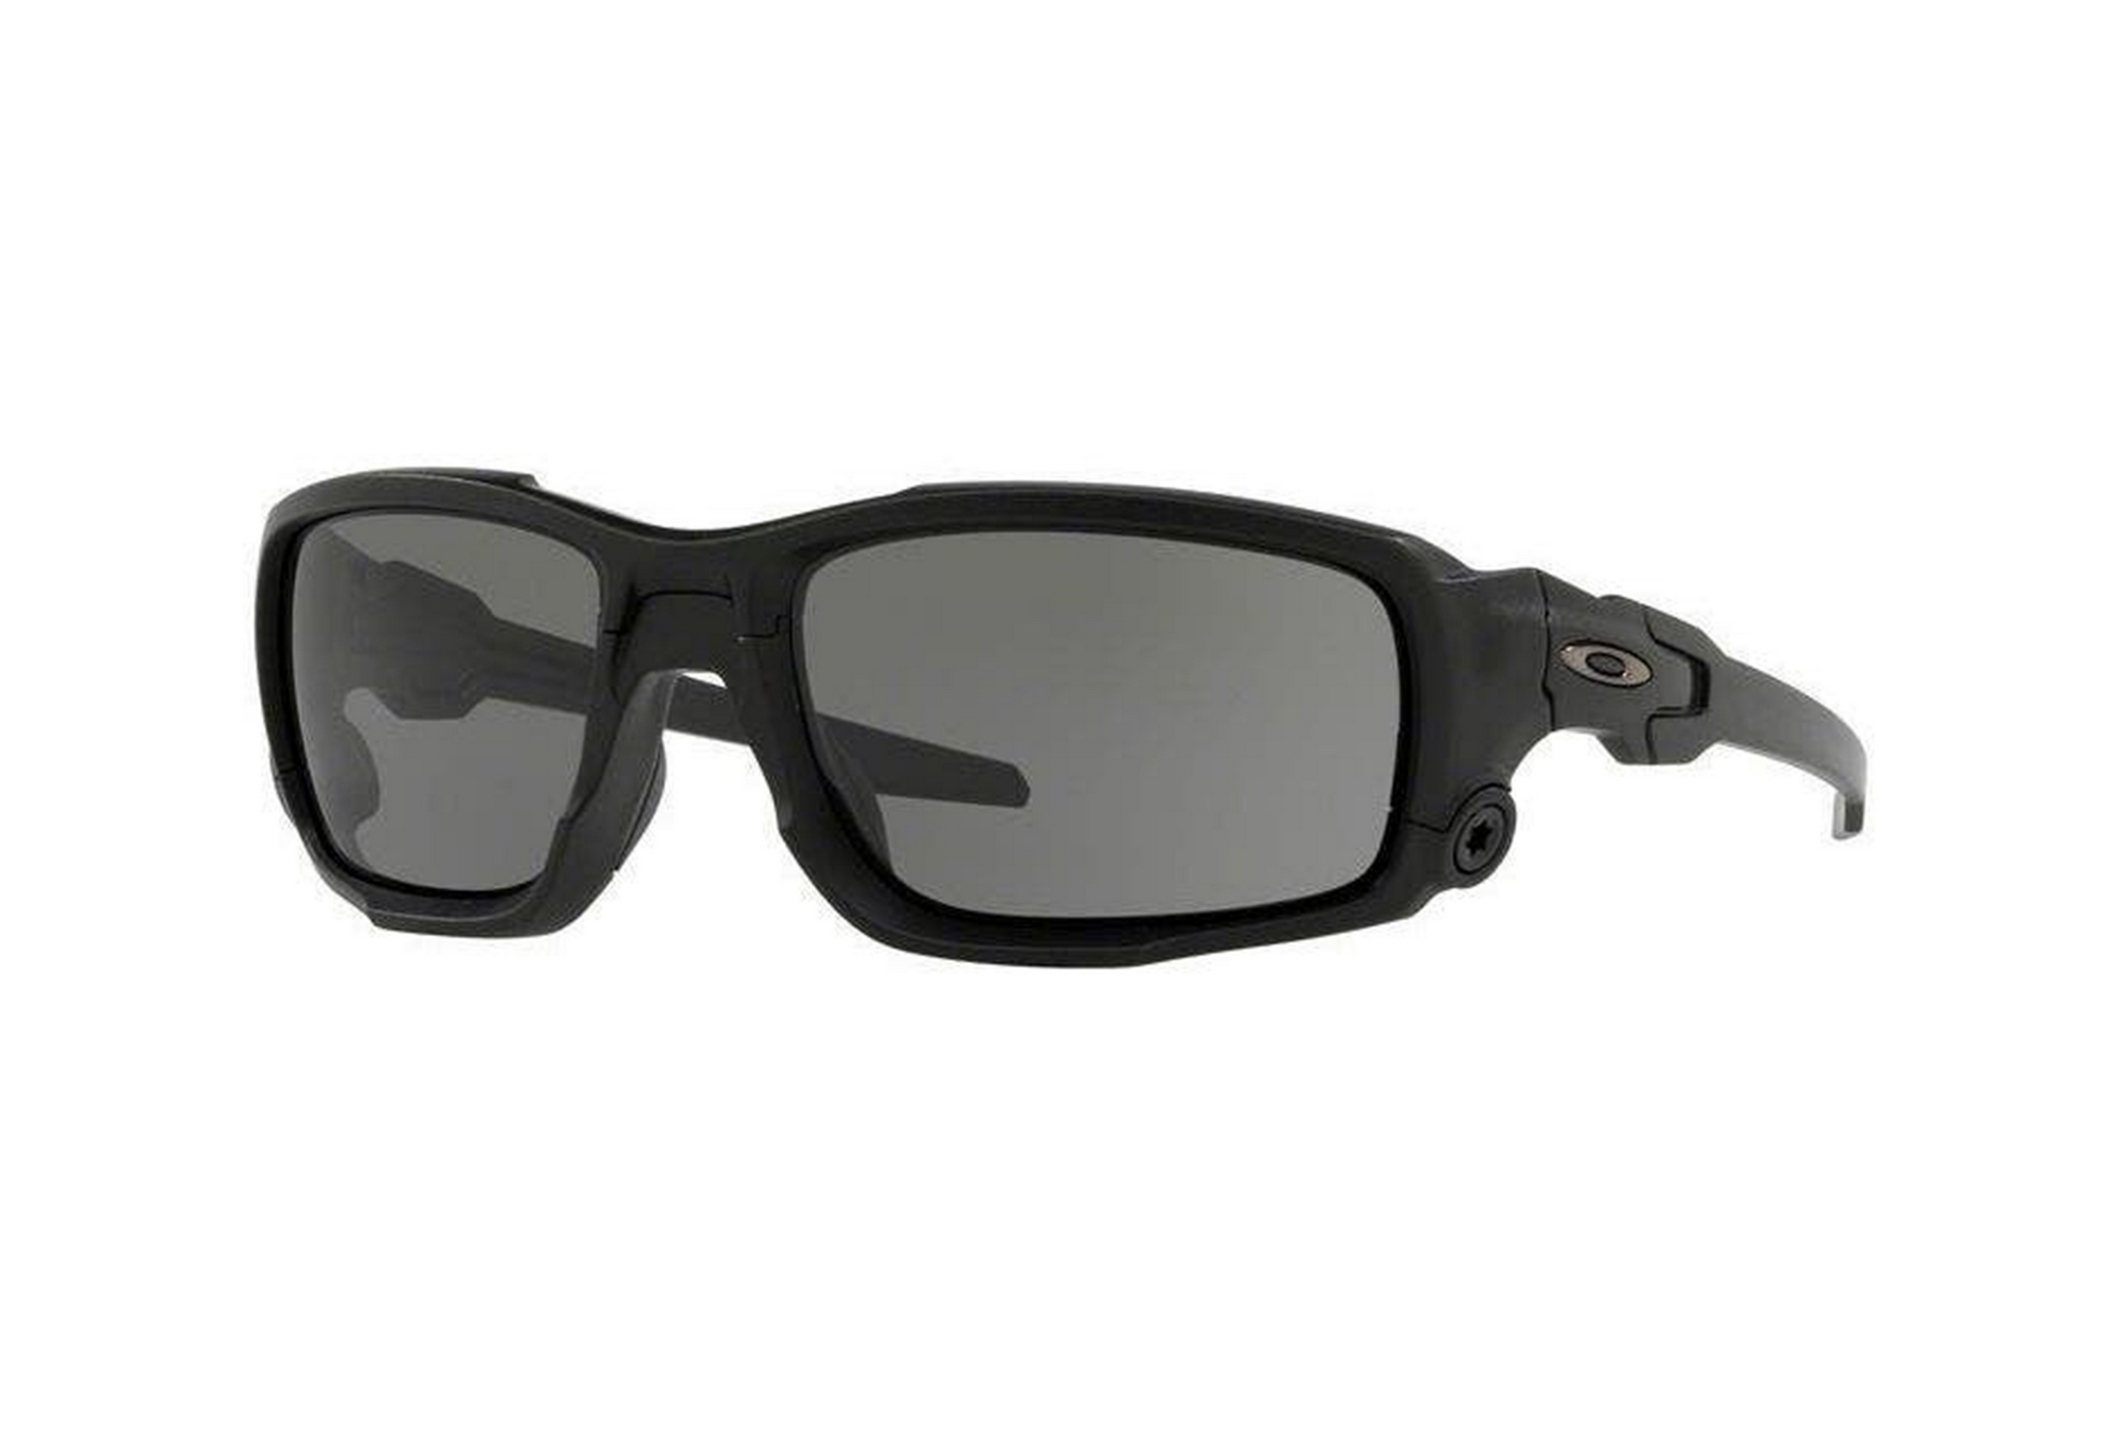 Shop Top Prescription Tennis Sunglasses Brands and Bolle Sunglasses